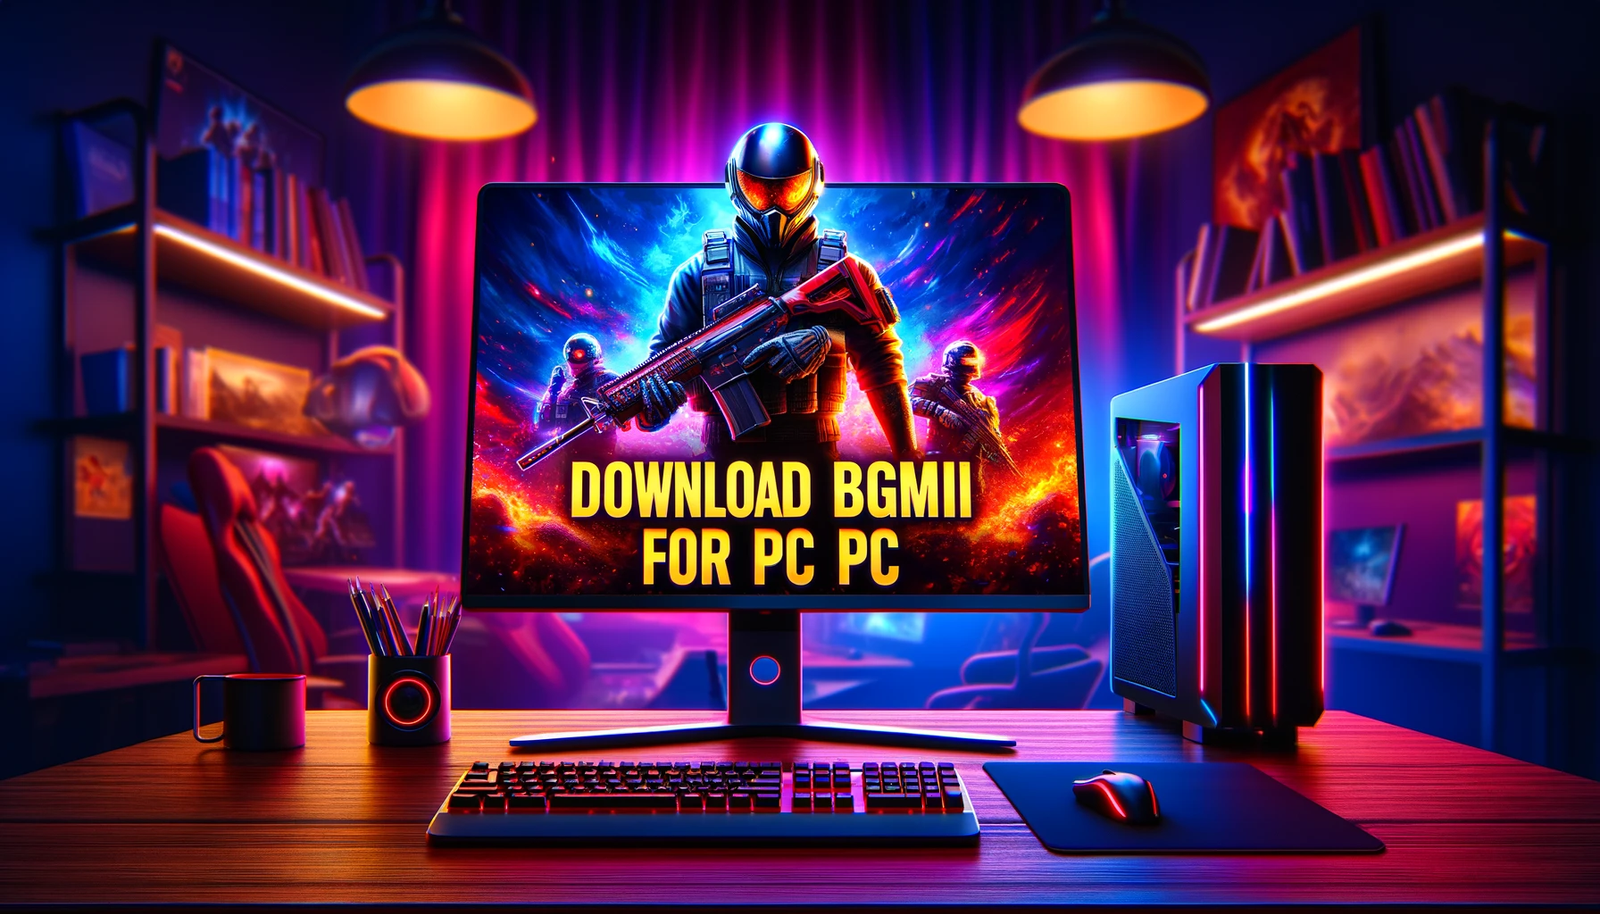 Download BGMI for PC